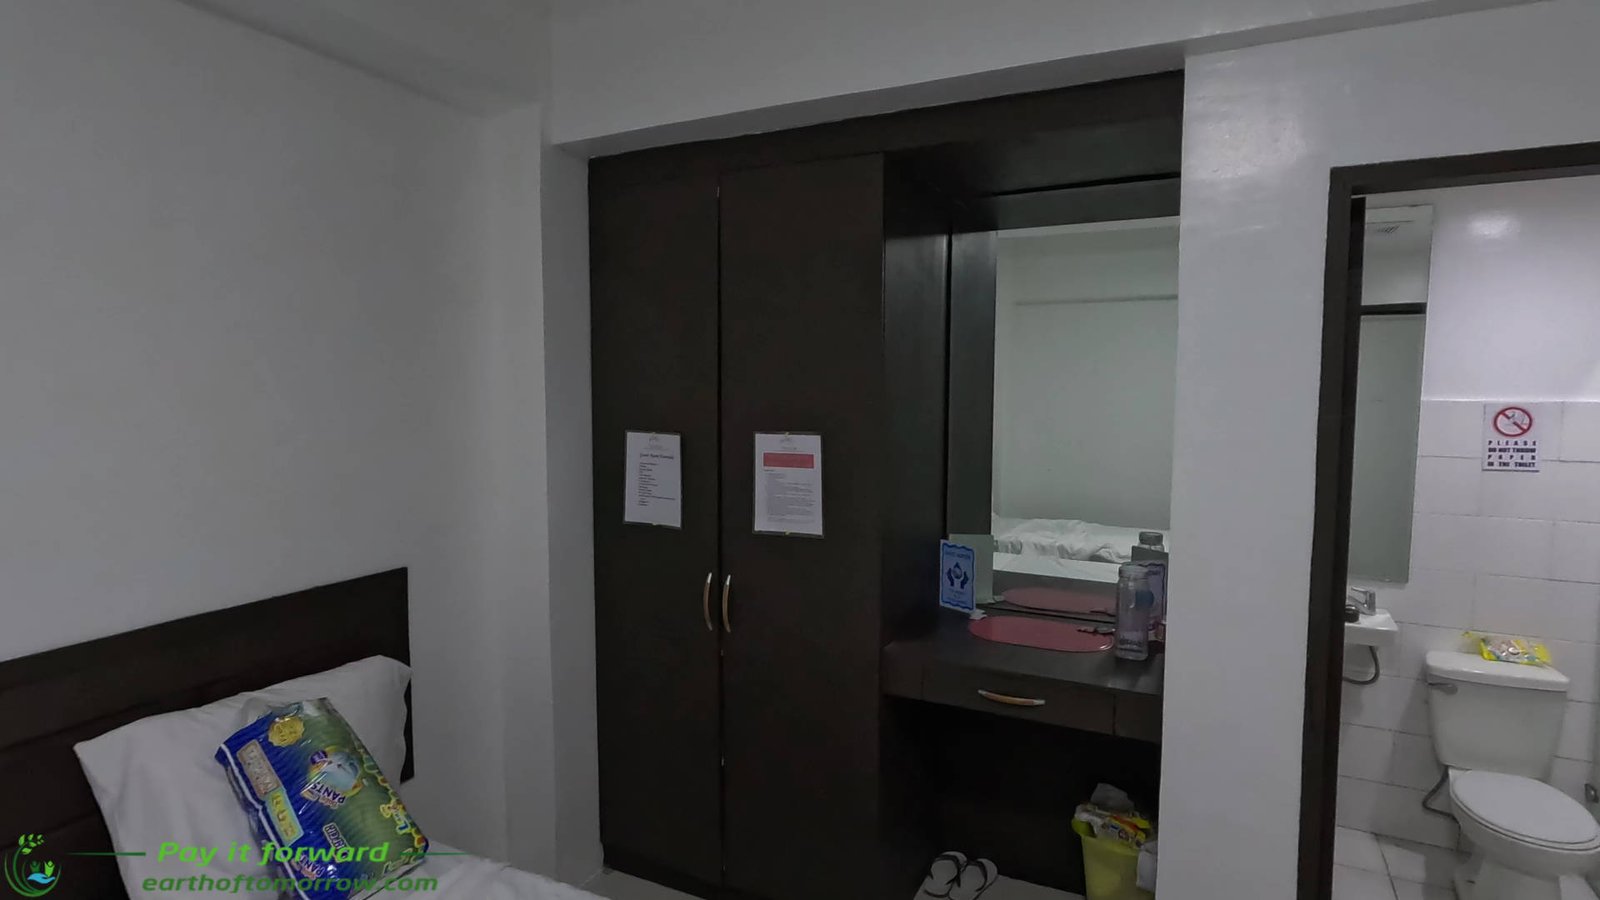 We review The Strand Suites Dormitel in Davao City Mindanao